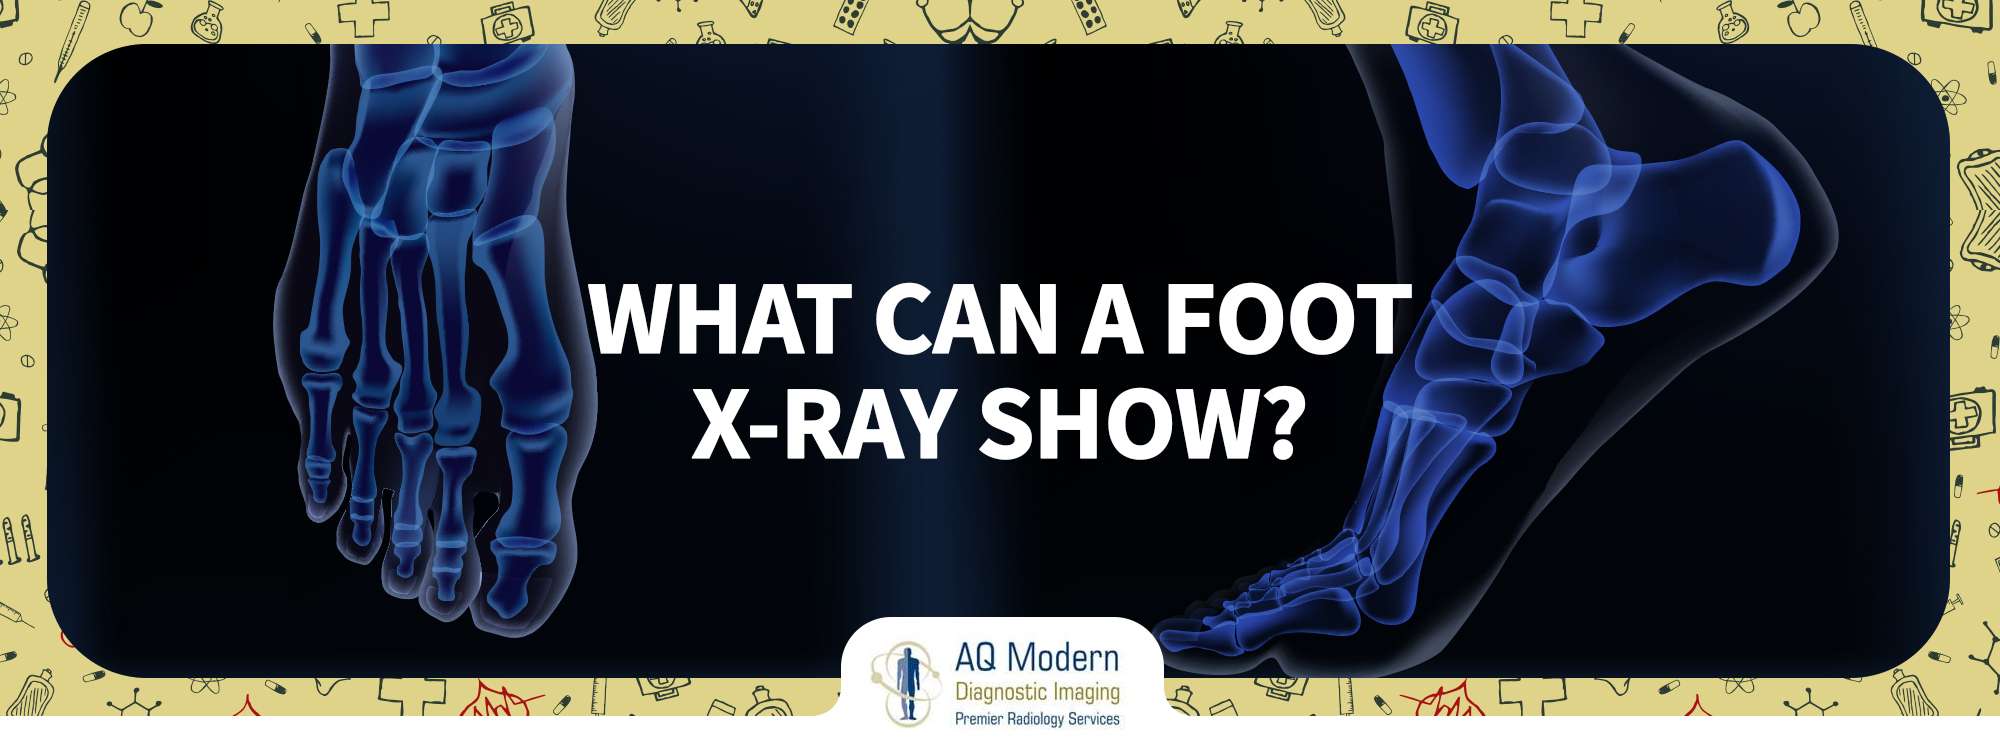 xray of foot